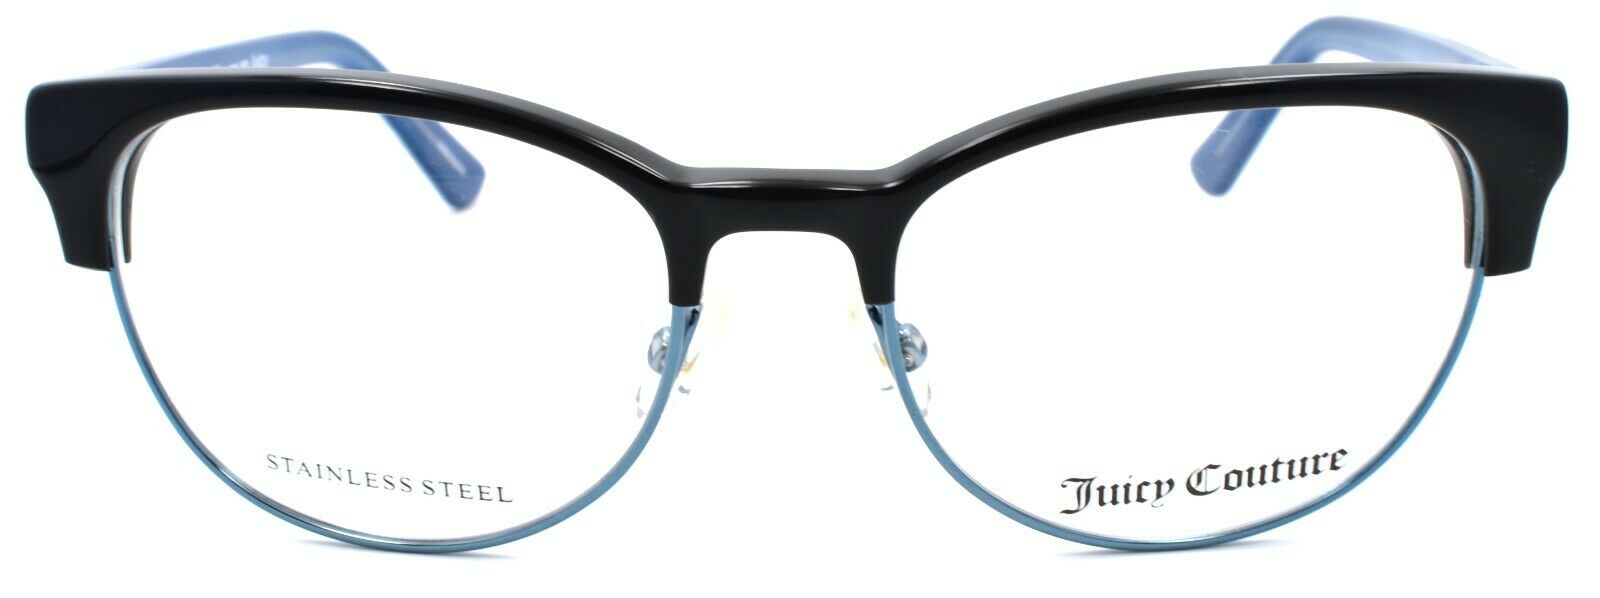 2-Juicy Couture JU928 ETJ Girls Eyeglasses Frames 47-16-125 Black / Teal w/ Hearts-762753166630-IKSpecs